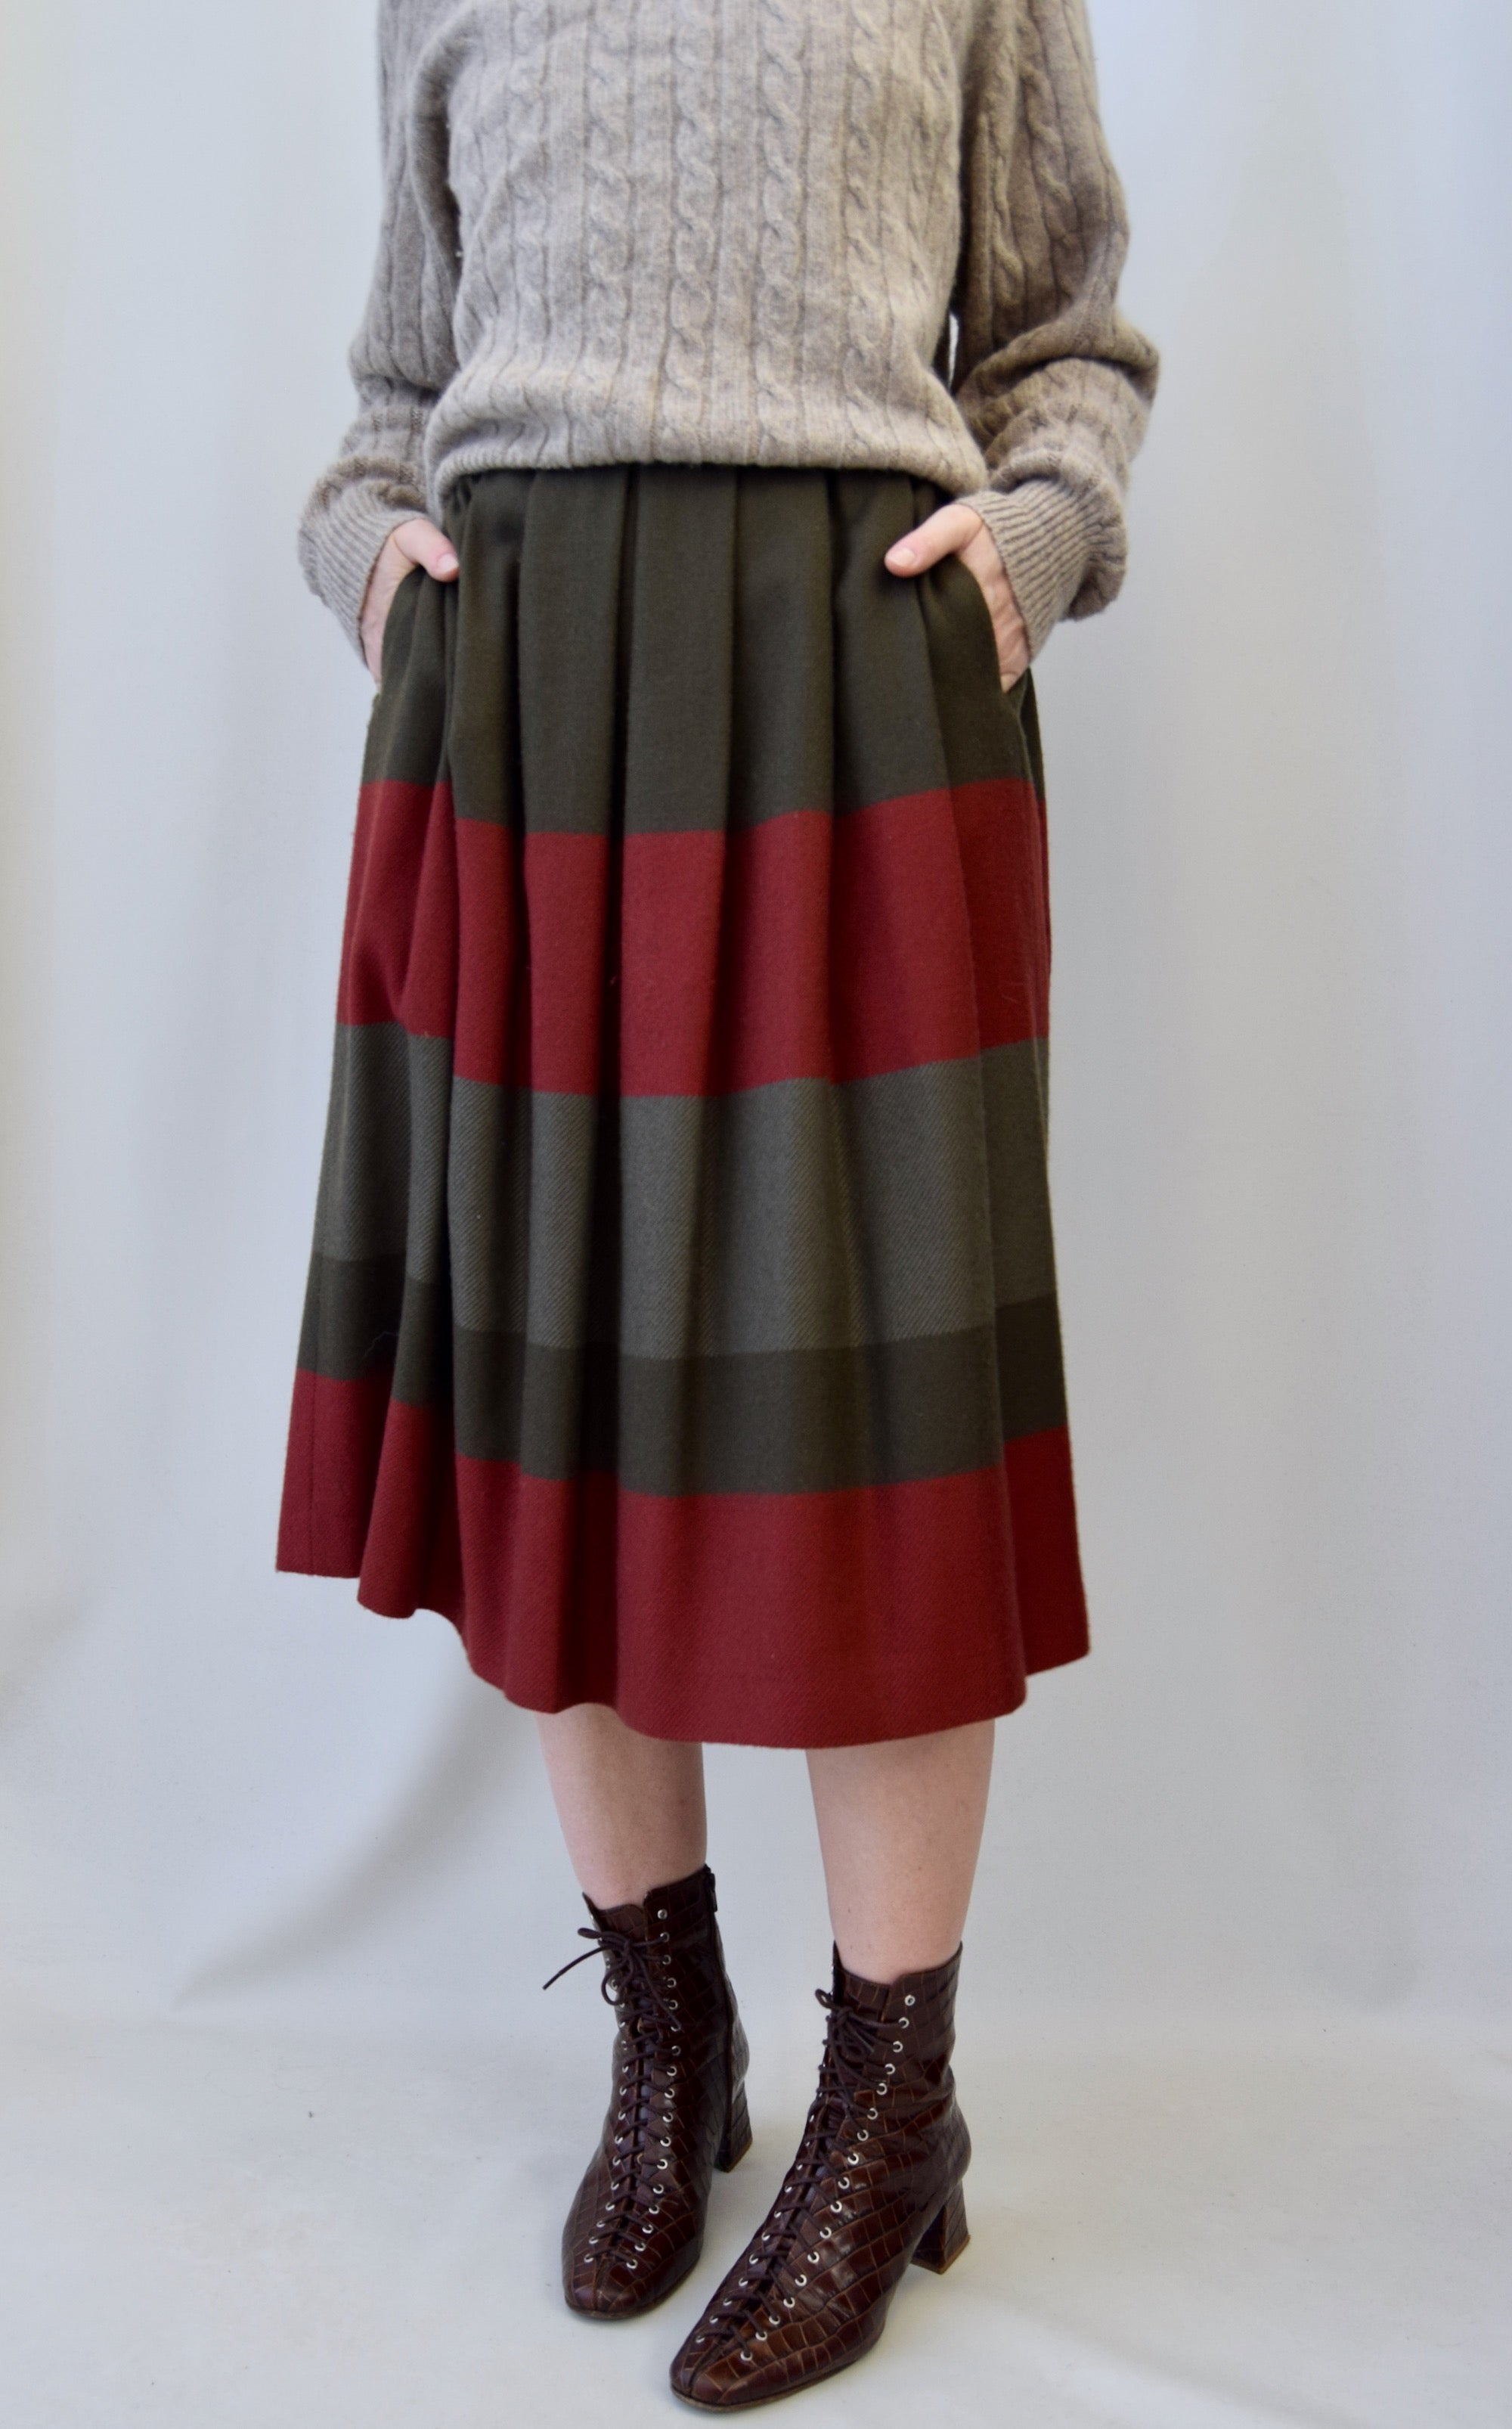 Vintage RODIER PARIS Wool Skirt